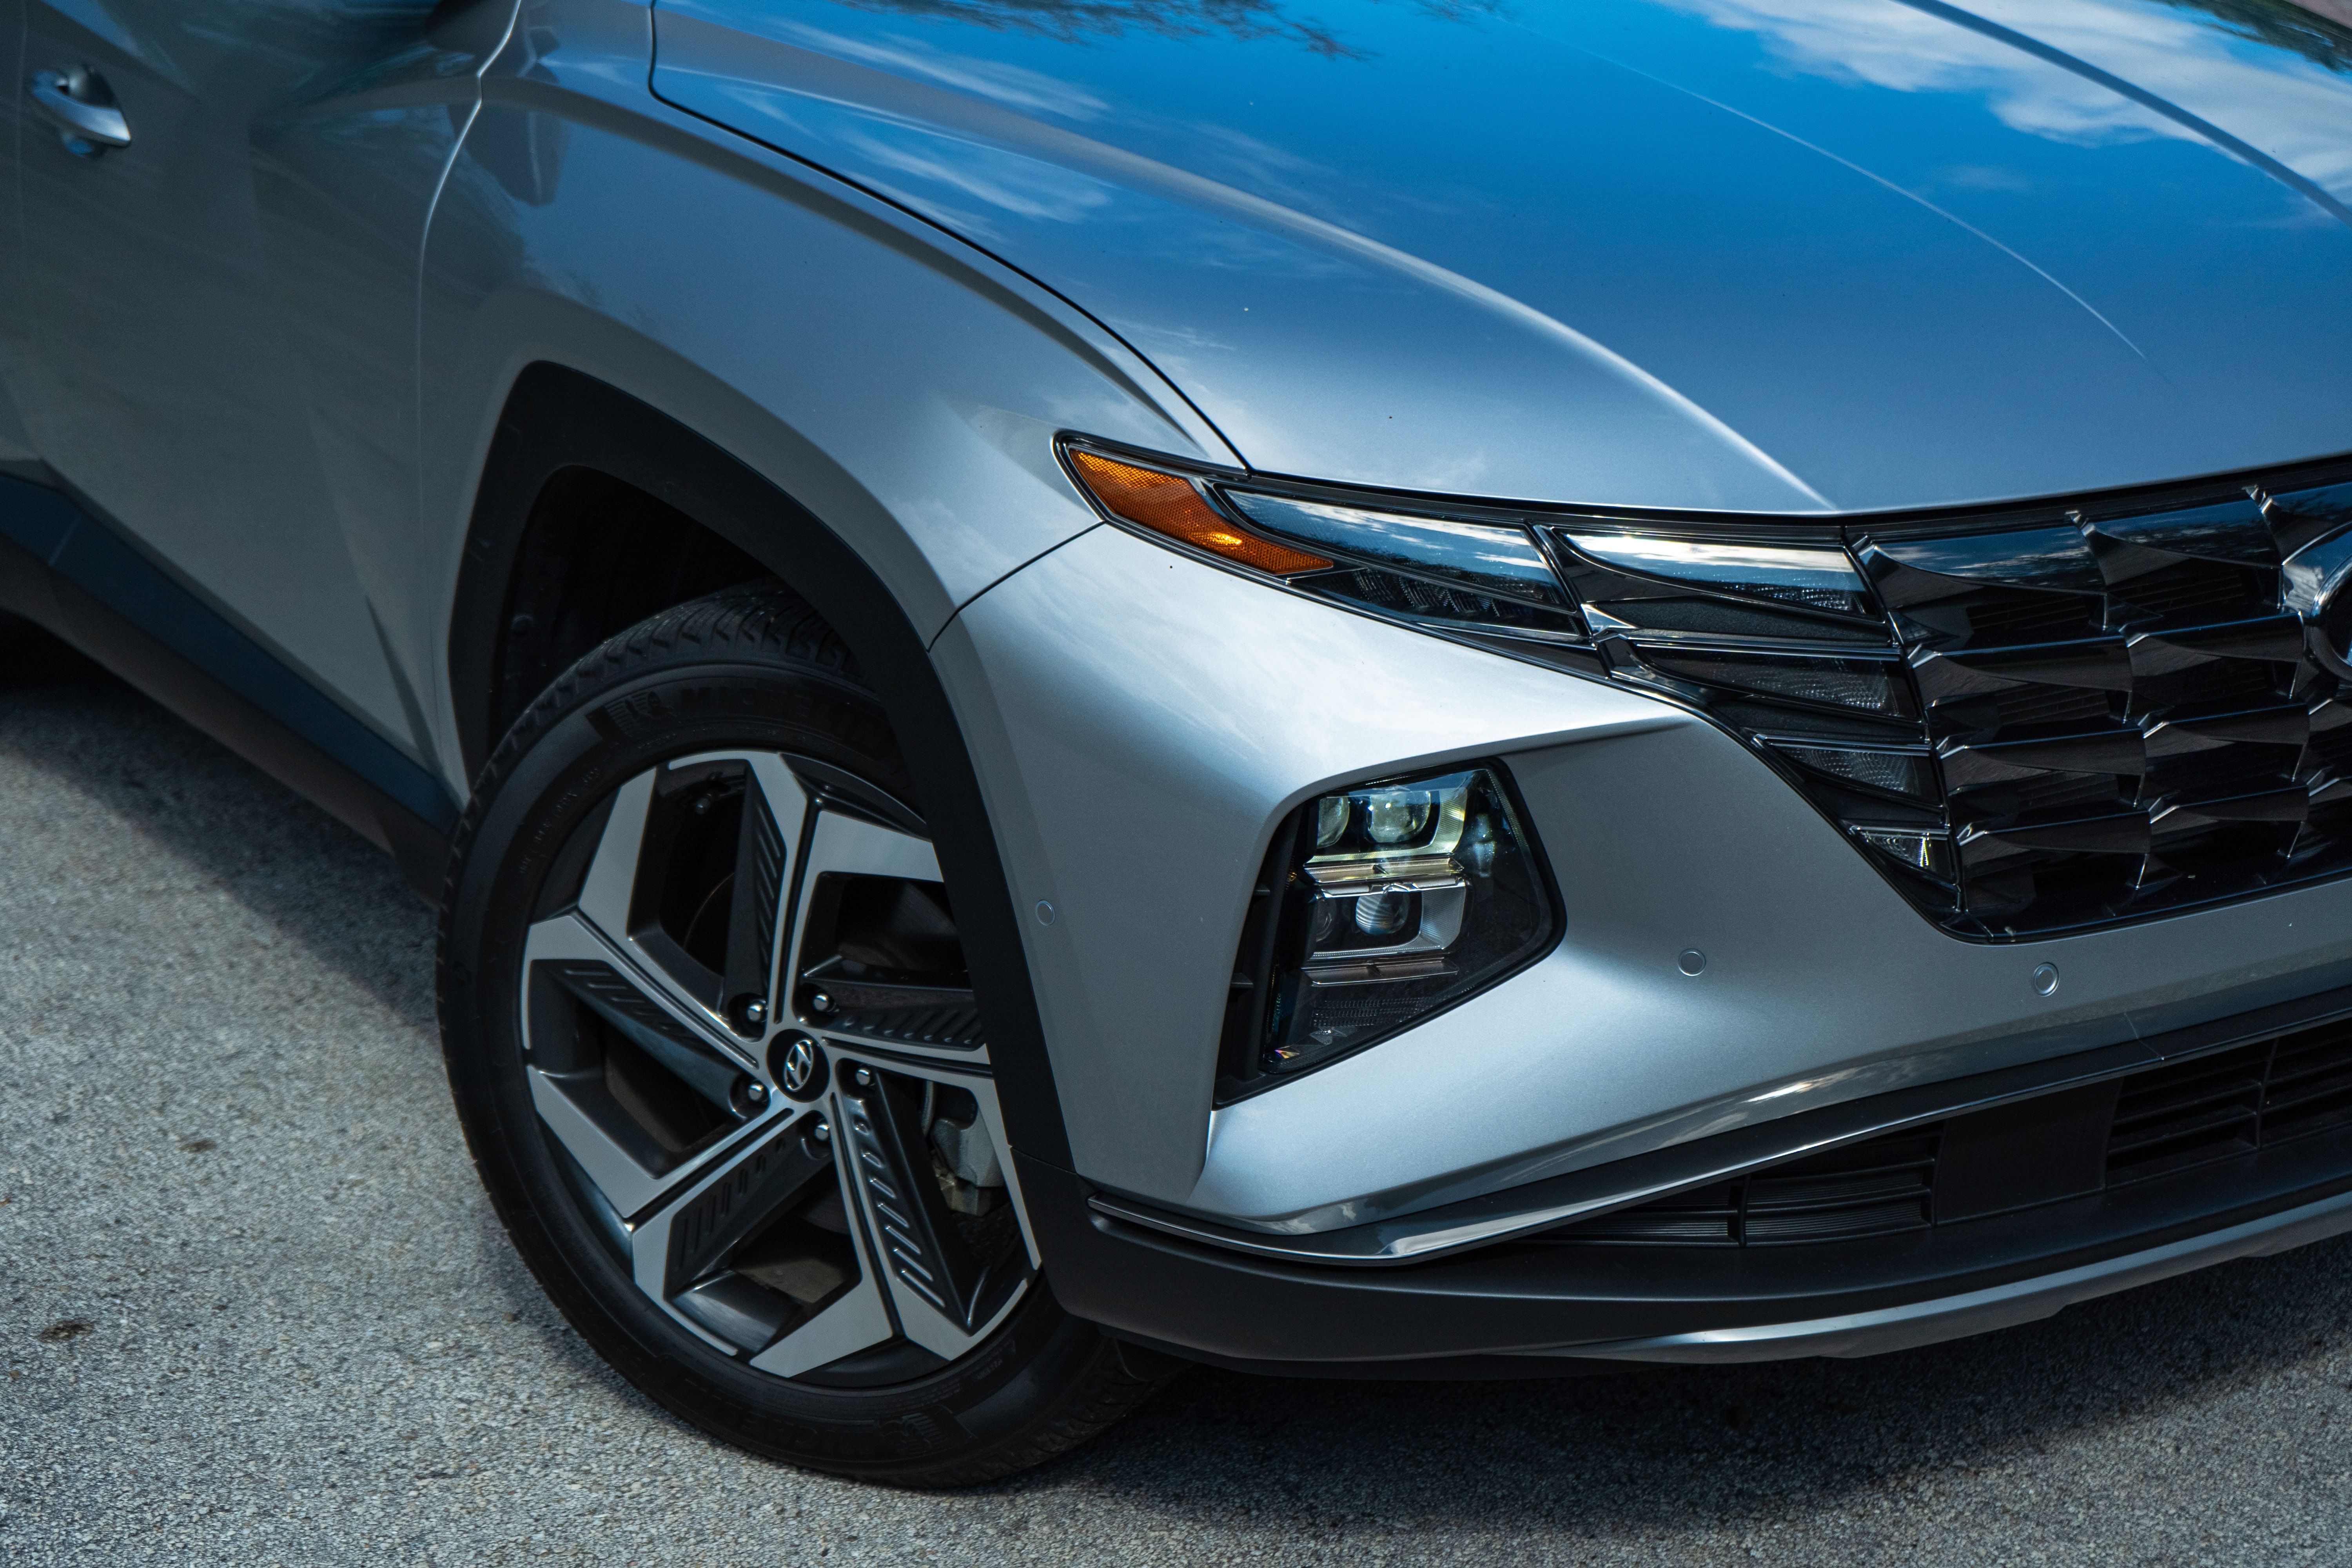 2022 Hyundai Tucson - Driven